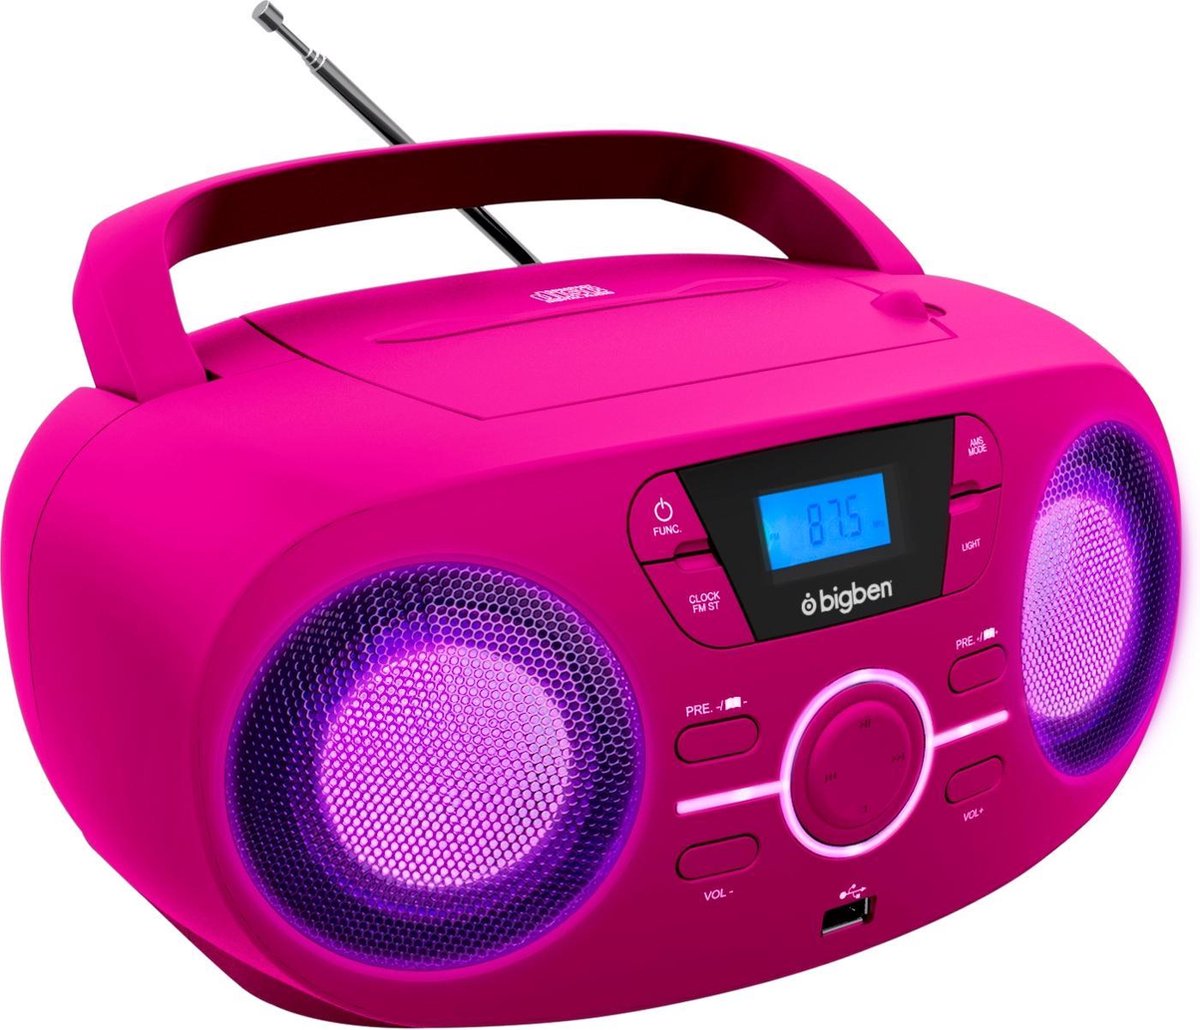 CD61 - Radio CD speler - USB – Roze | bol.com